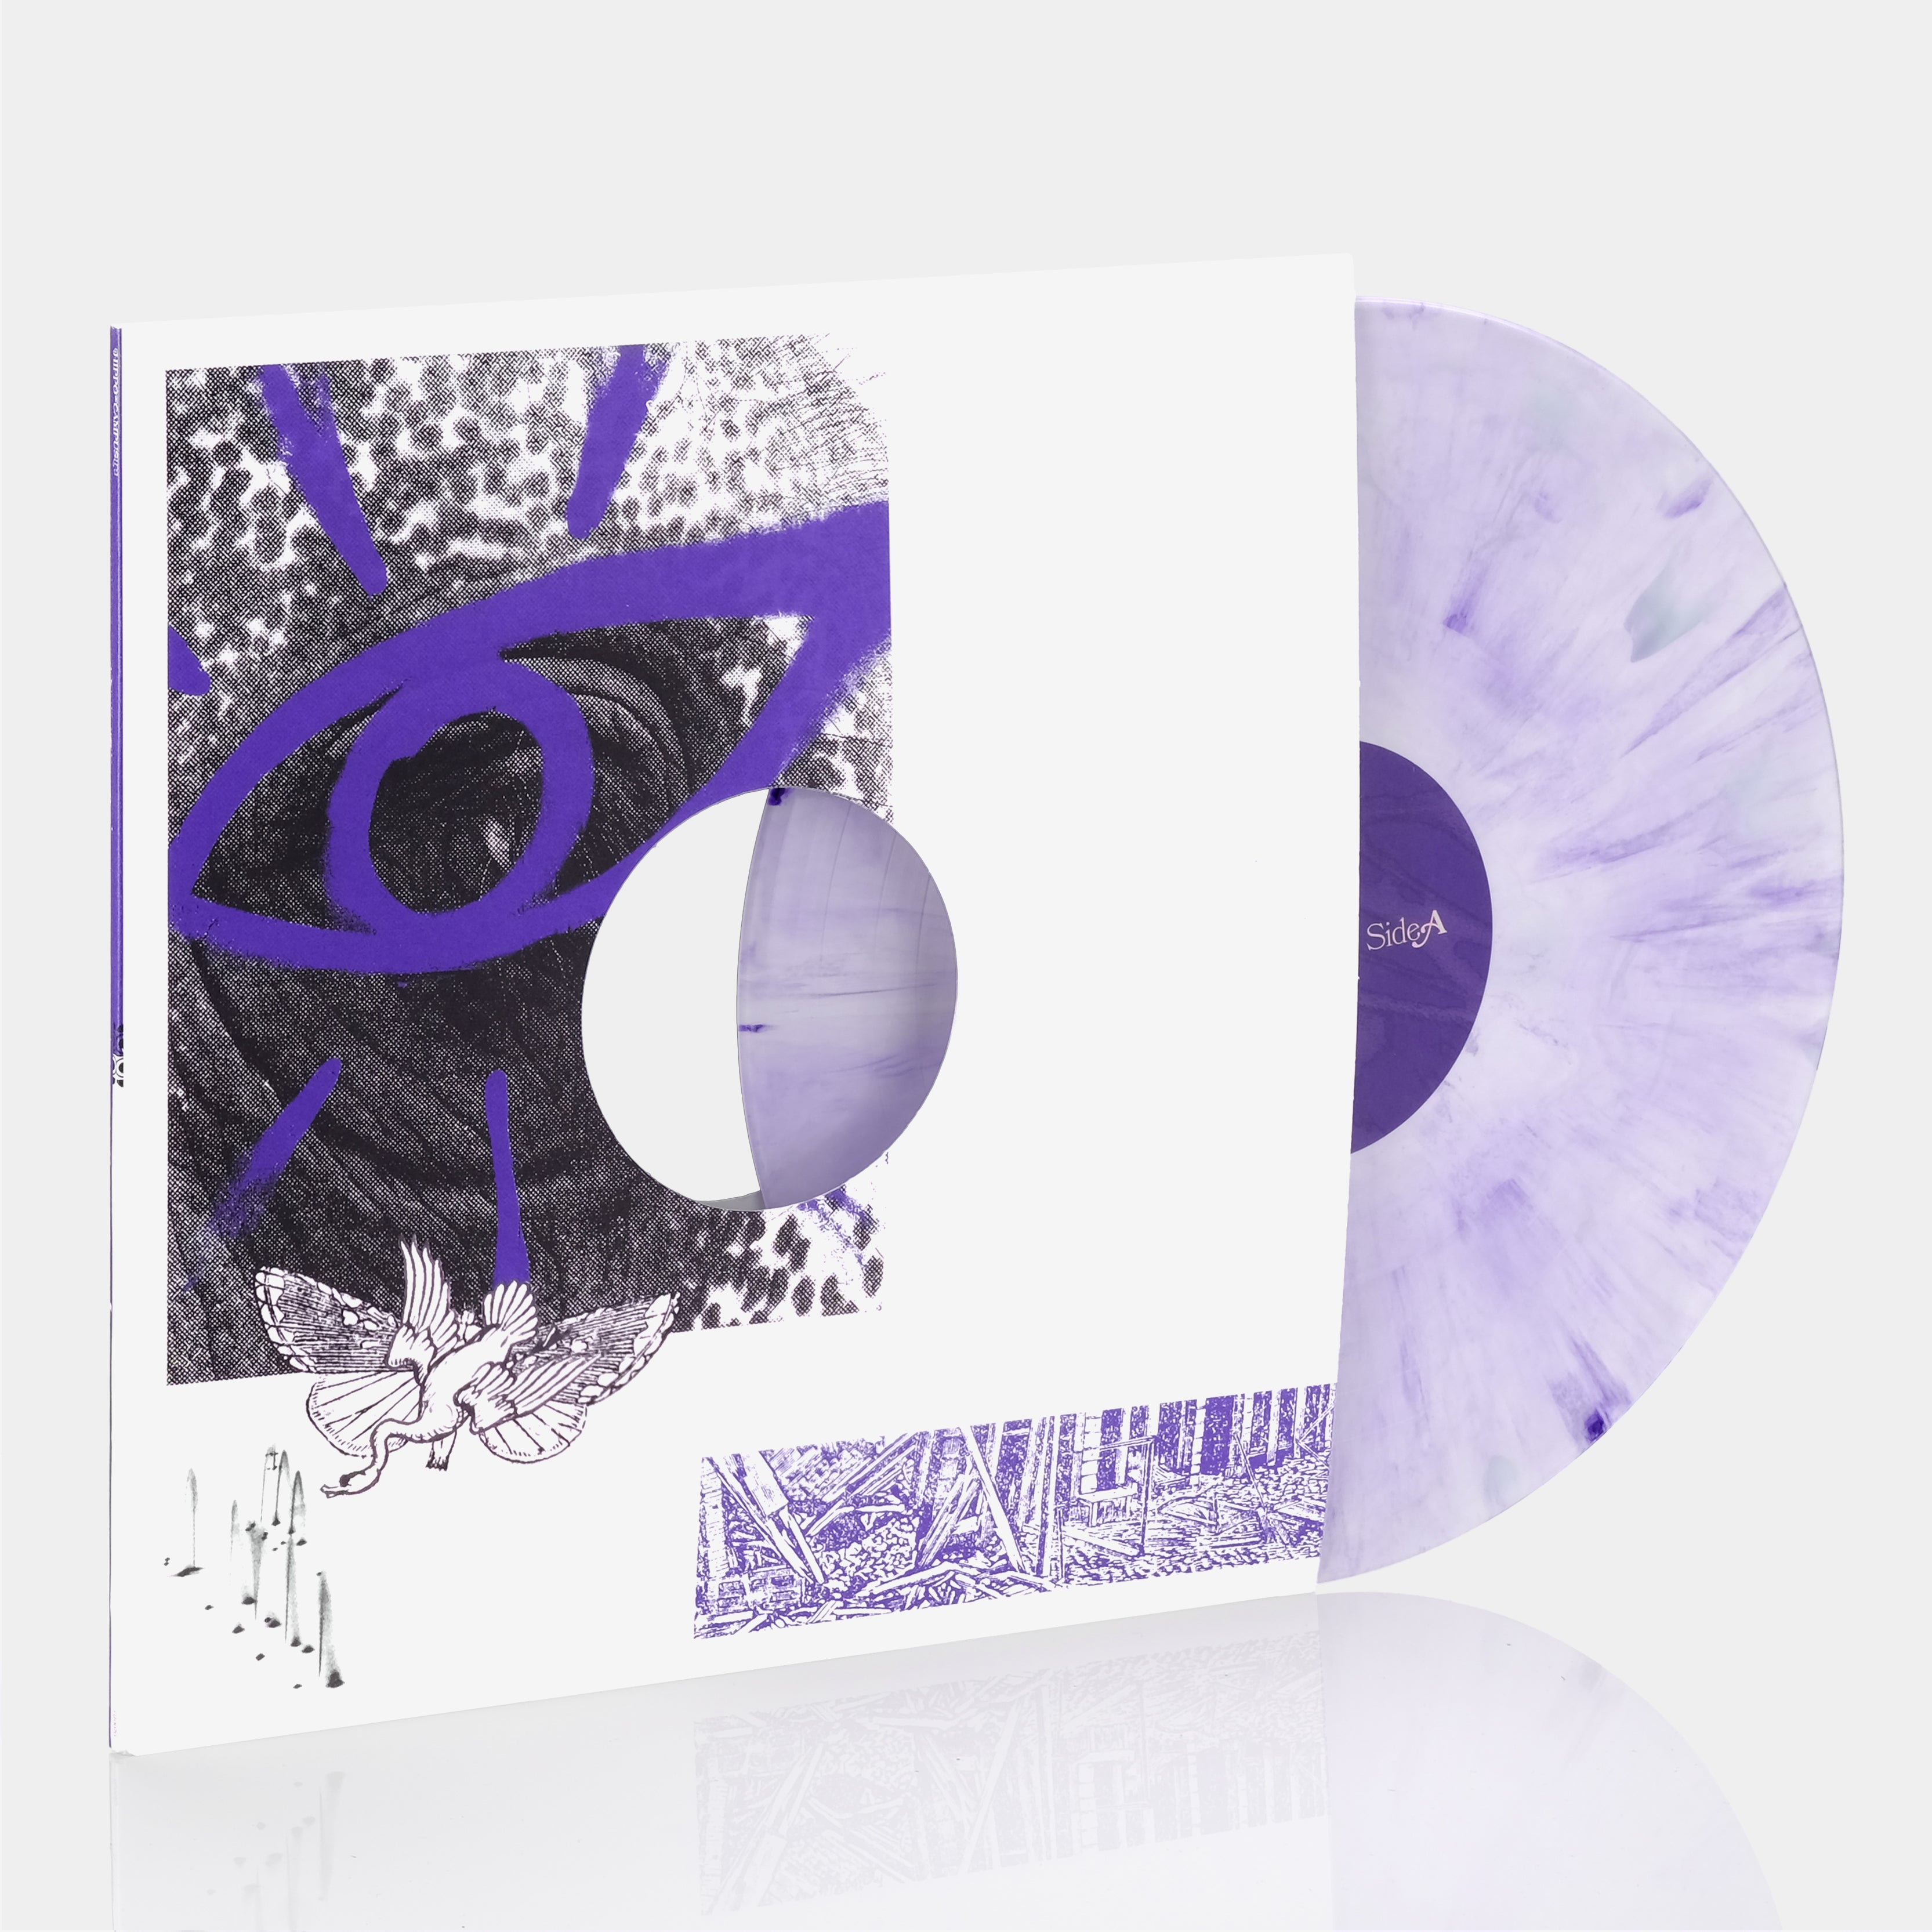 Hippo Campus - LP3 LP Opaque Purple Swirl Vinyl Record